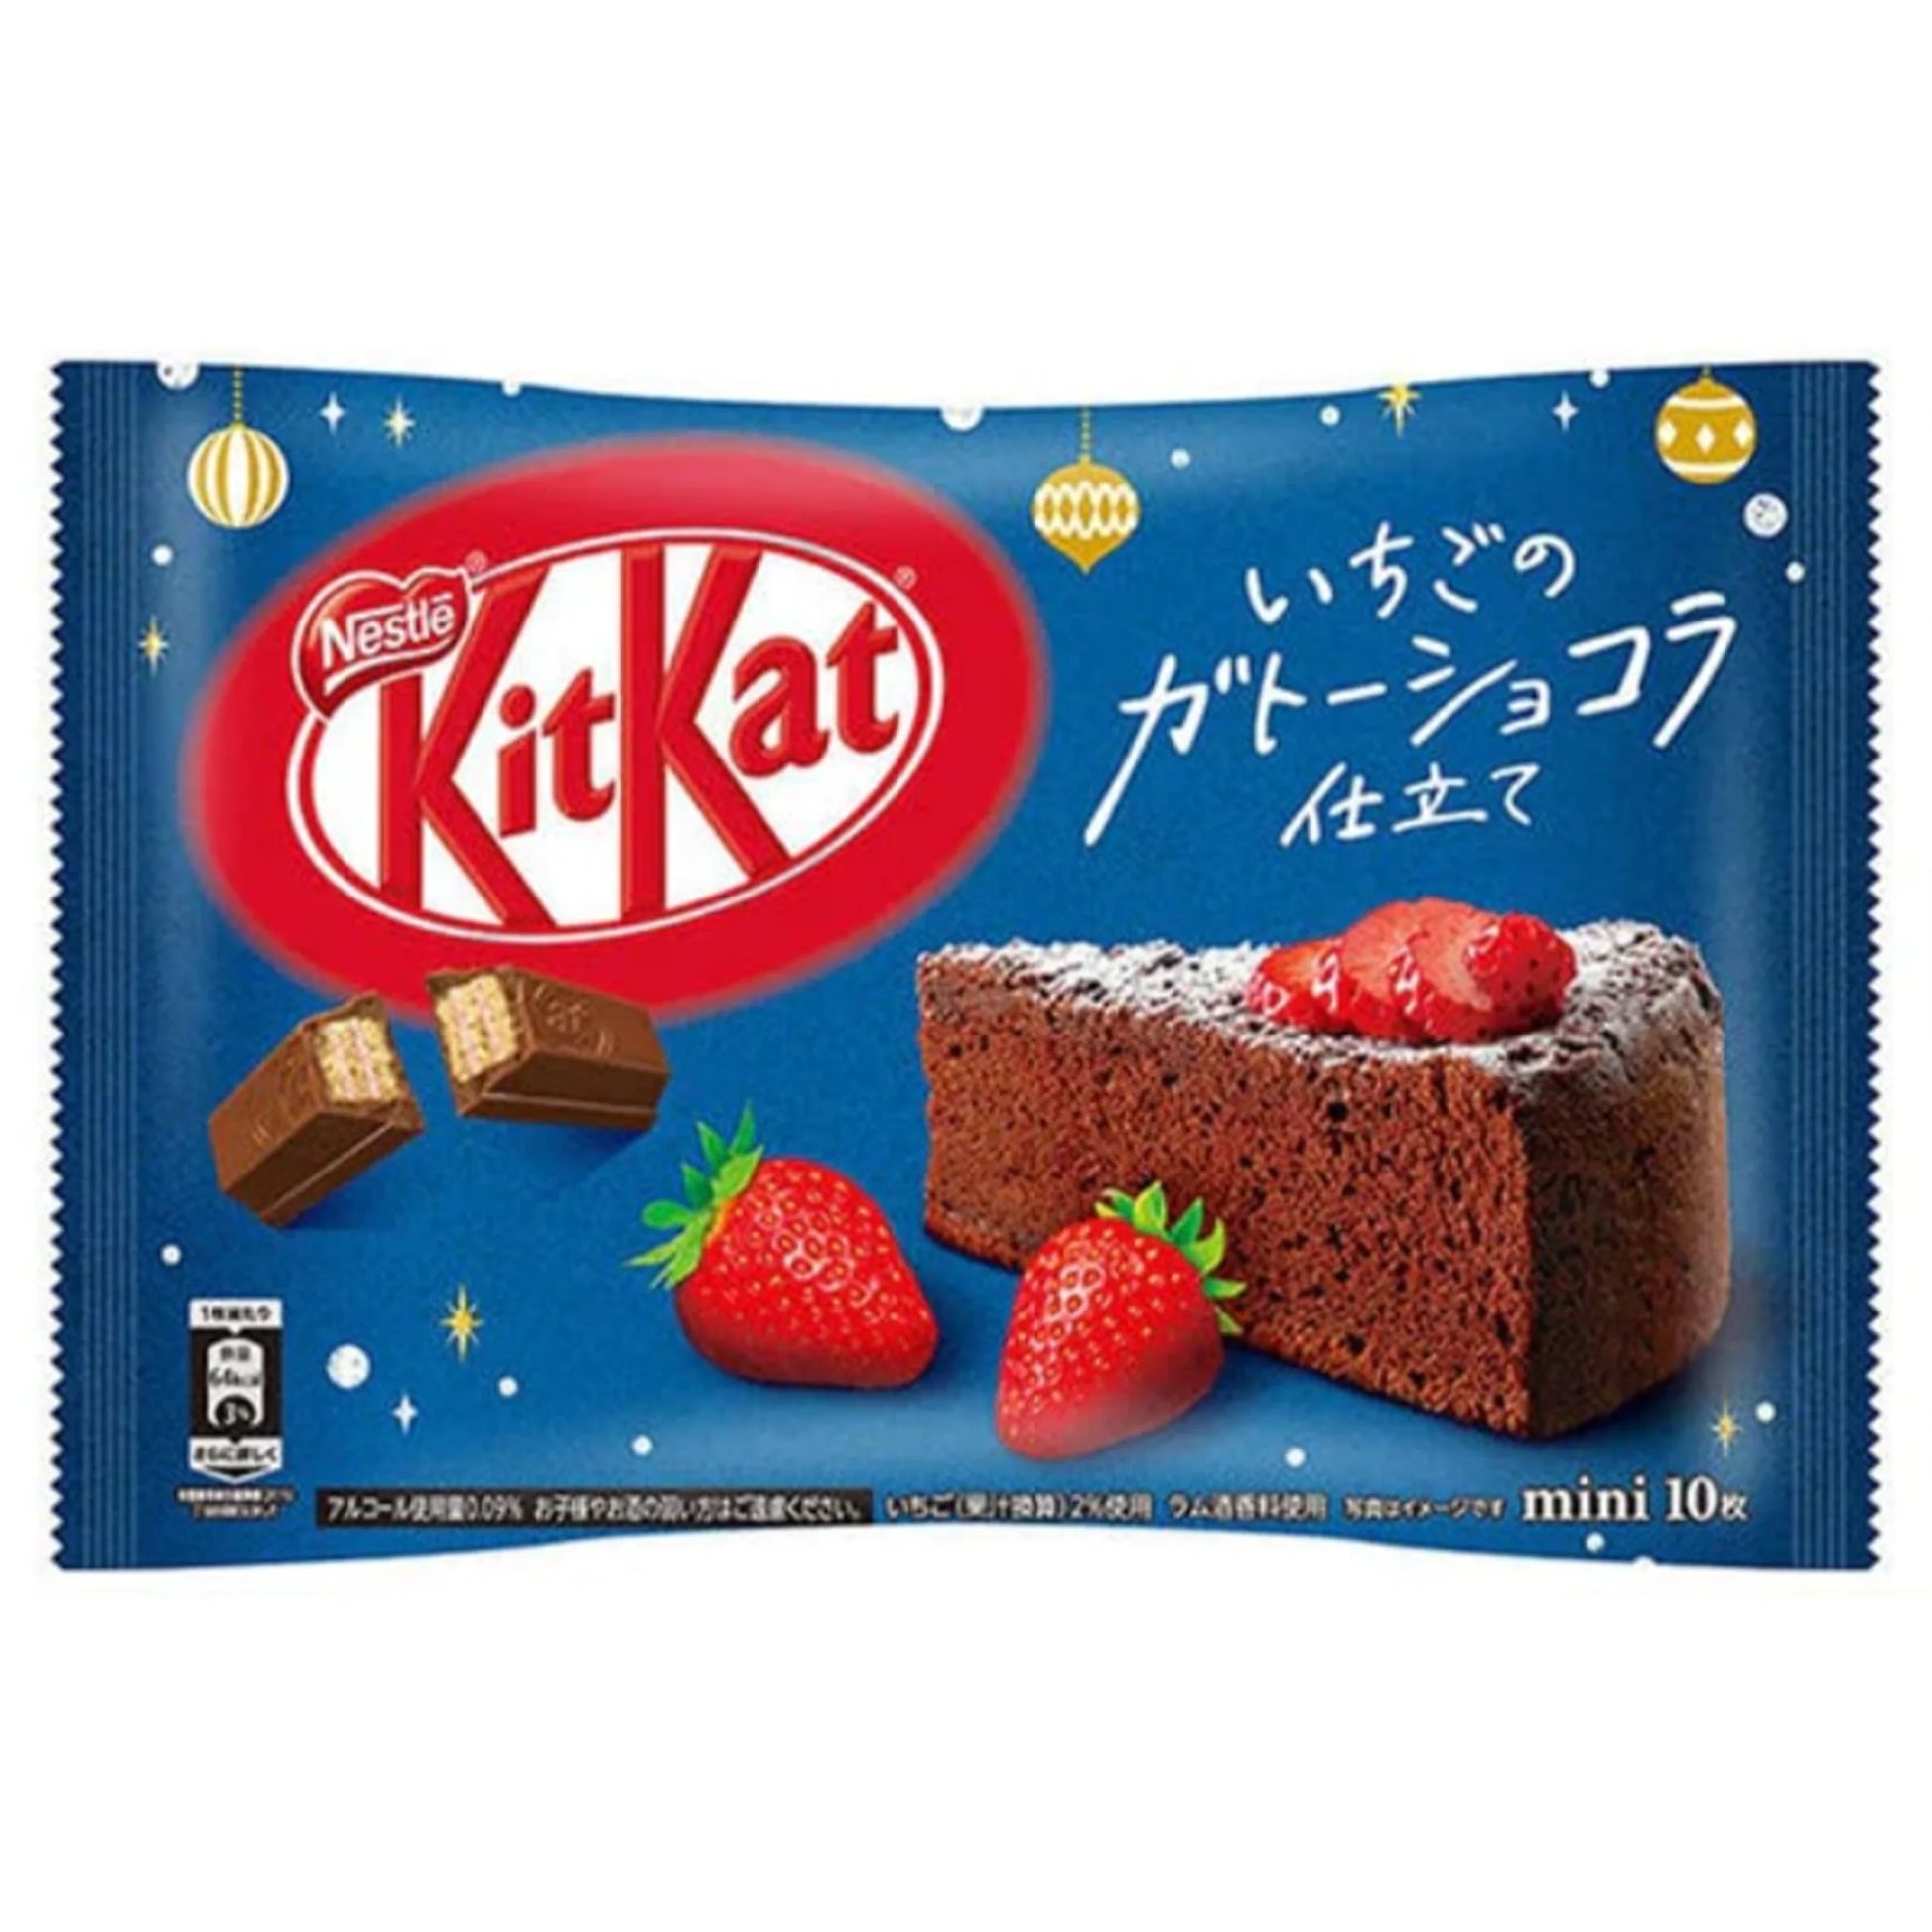 Kit Kat Strawberry Chocolate Cake Bag  Pixie Candy Shoppe   